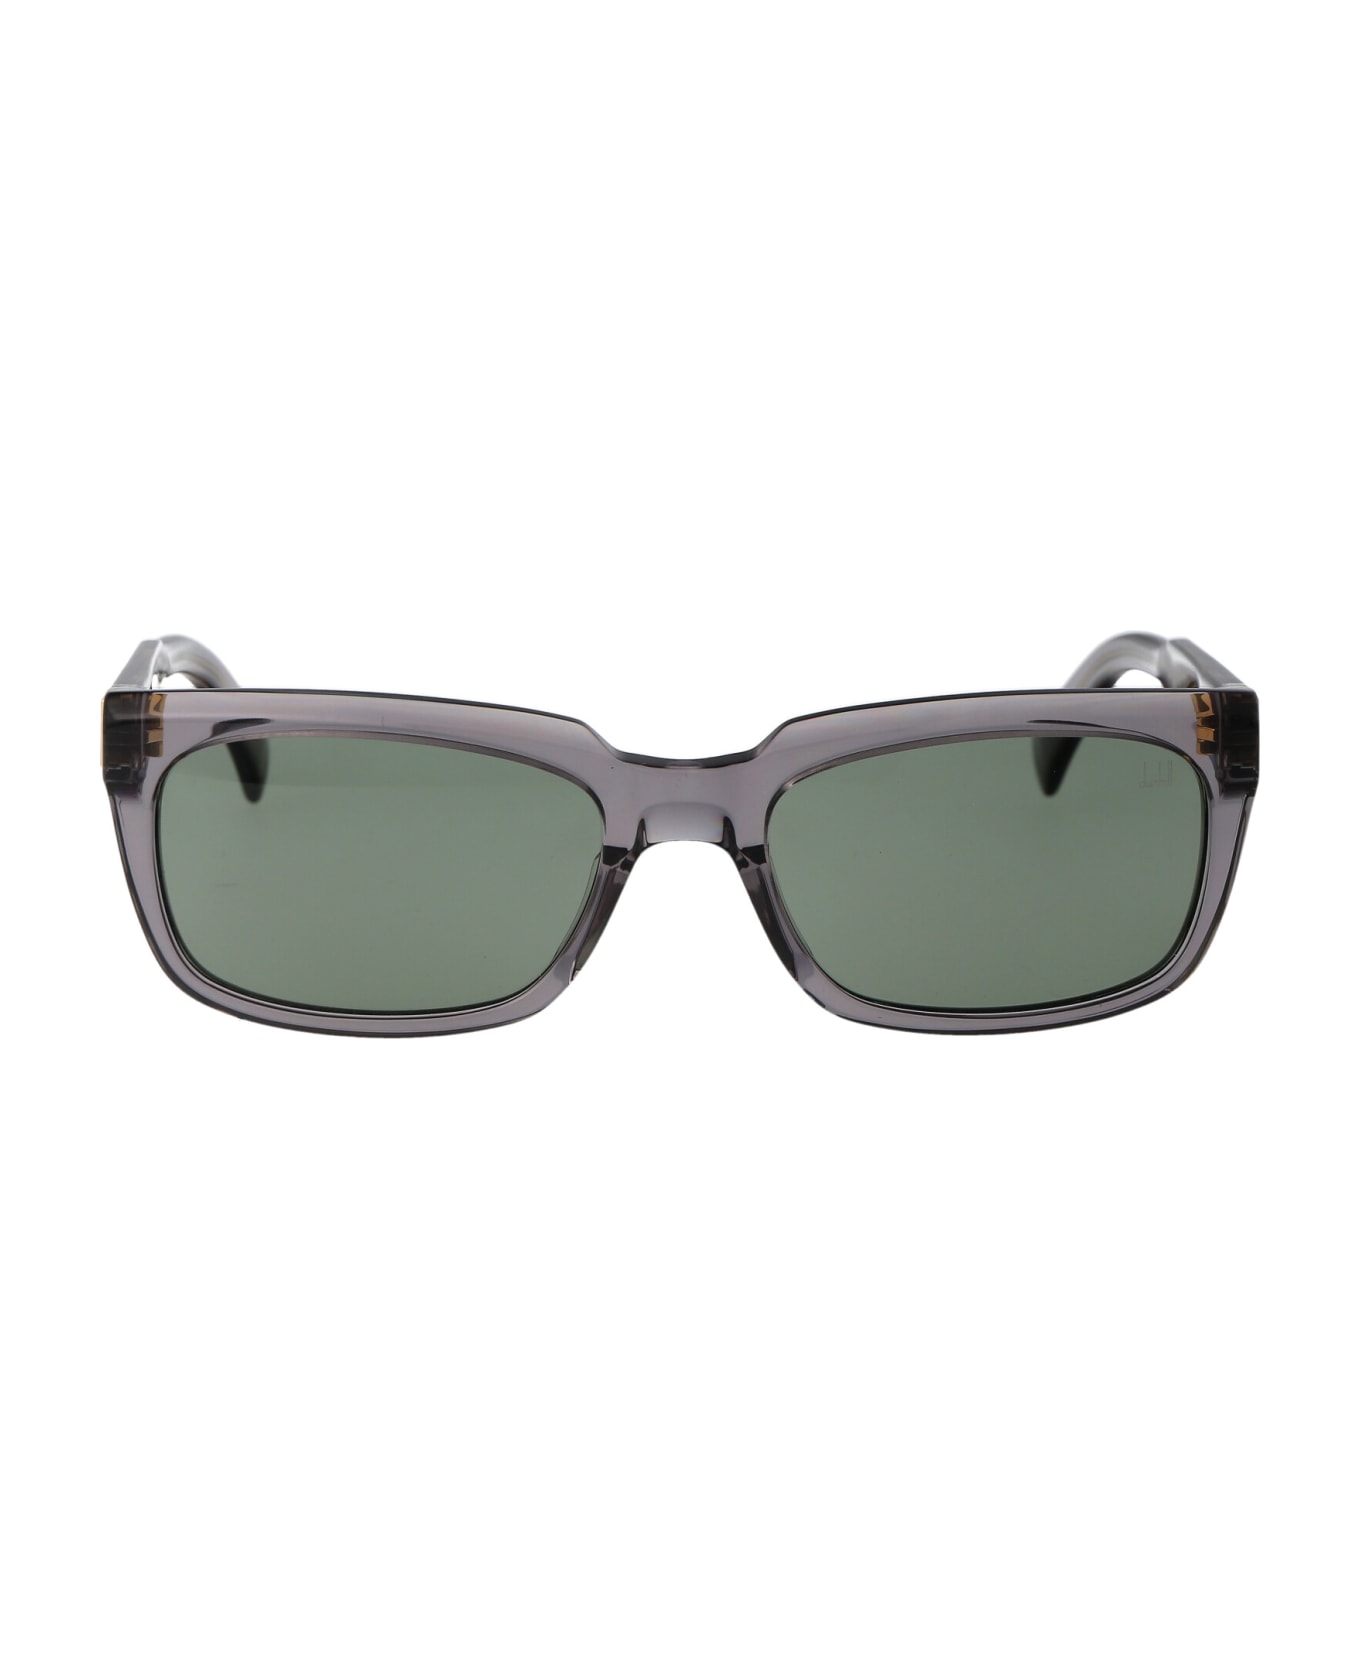 Dunhill Du0056s Sunglasses - 003 GREY GREY GREEN